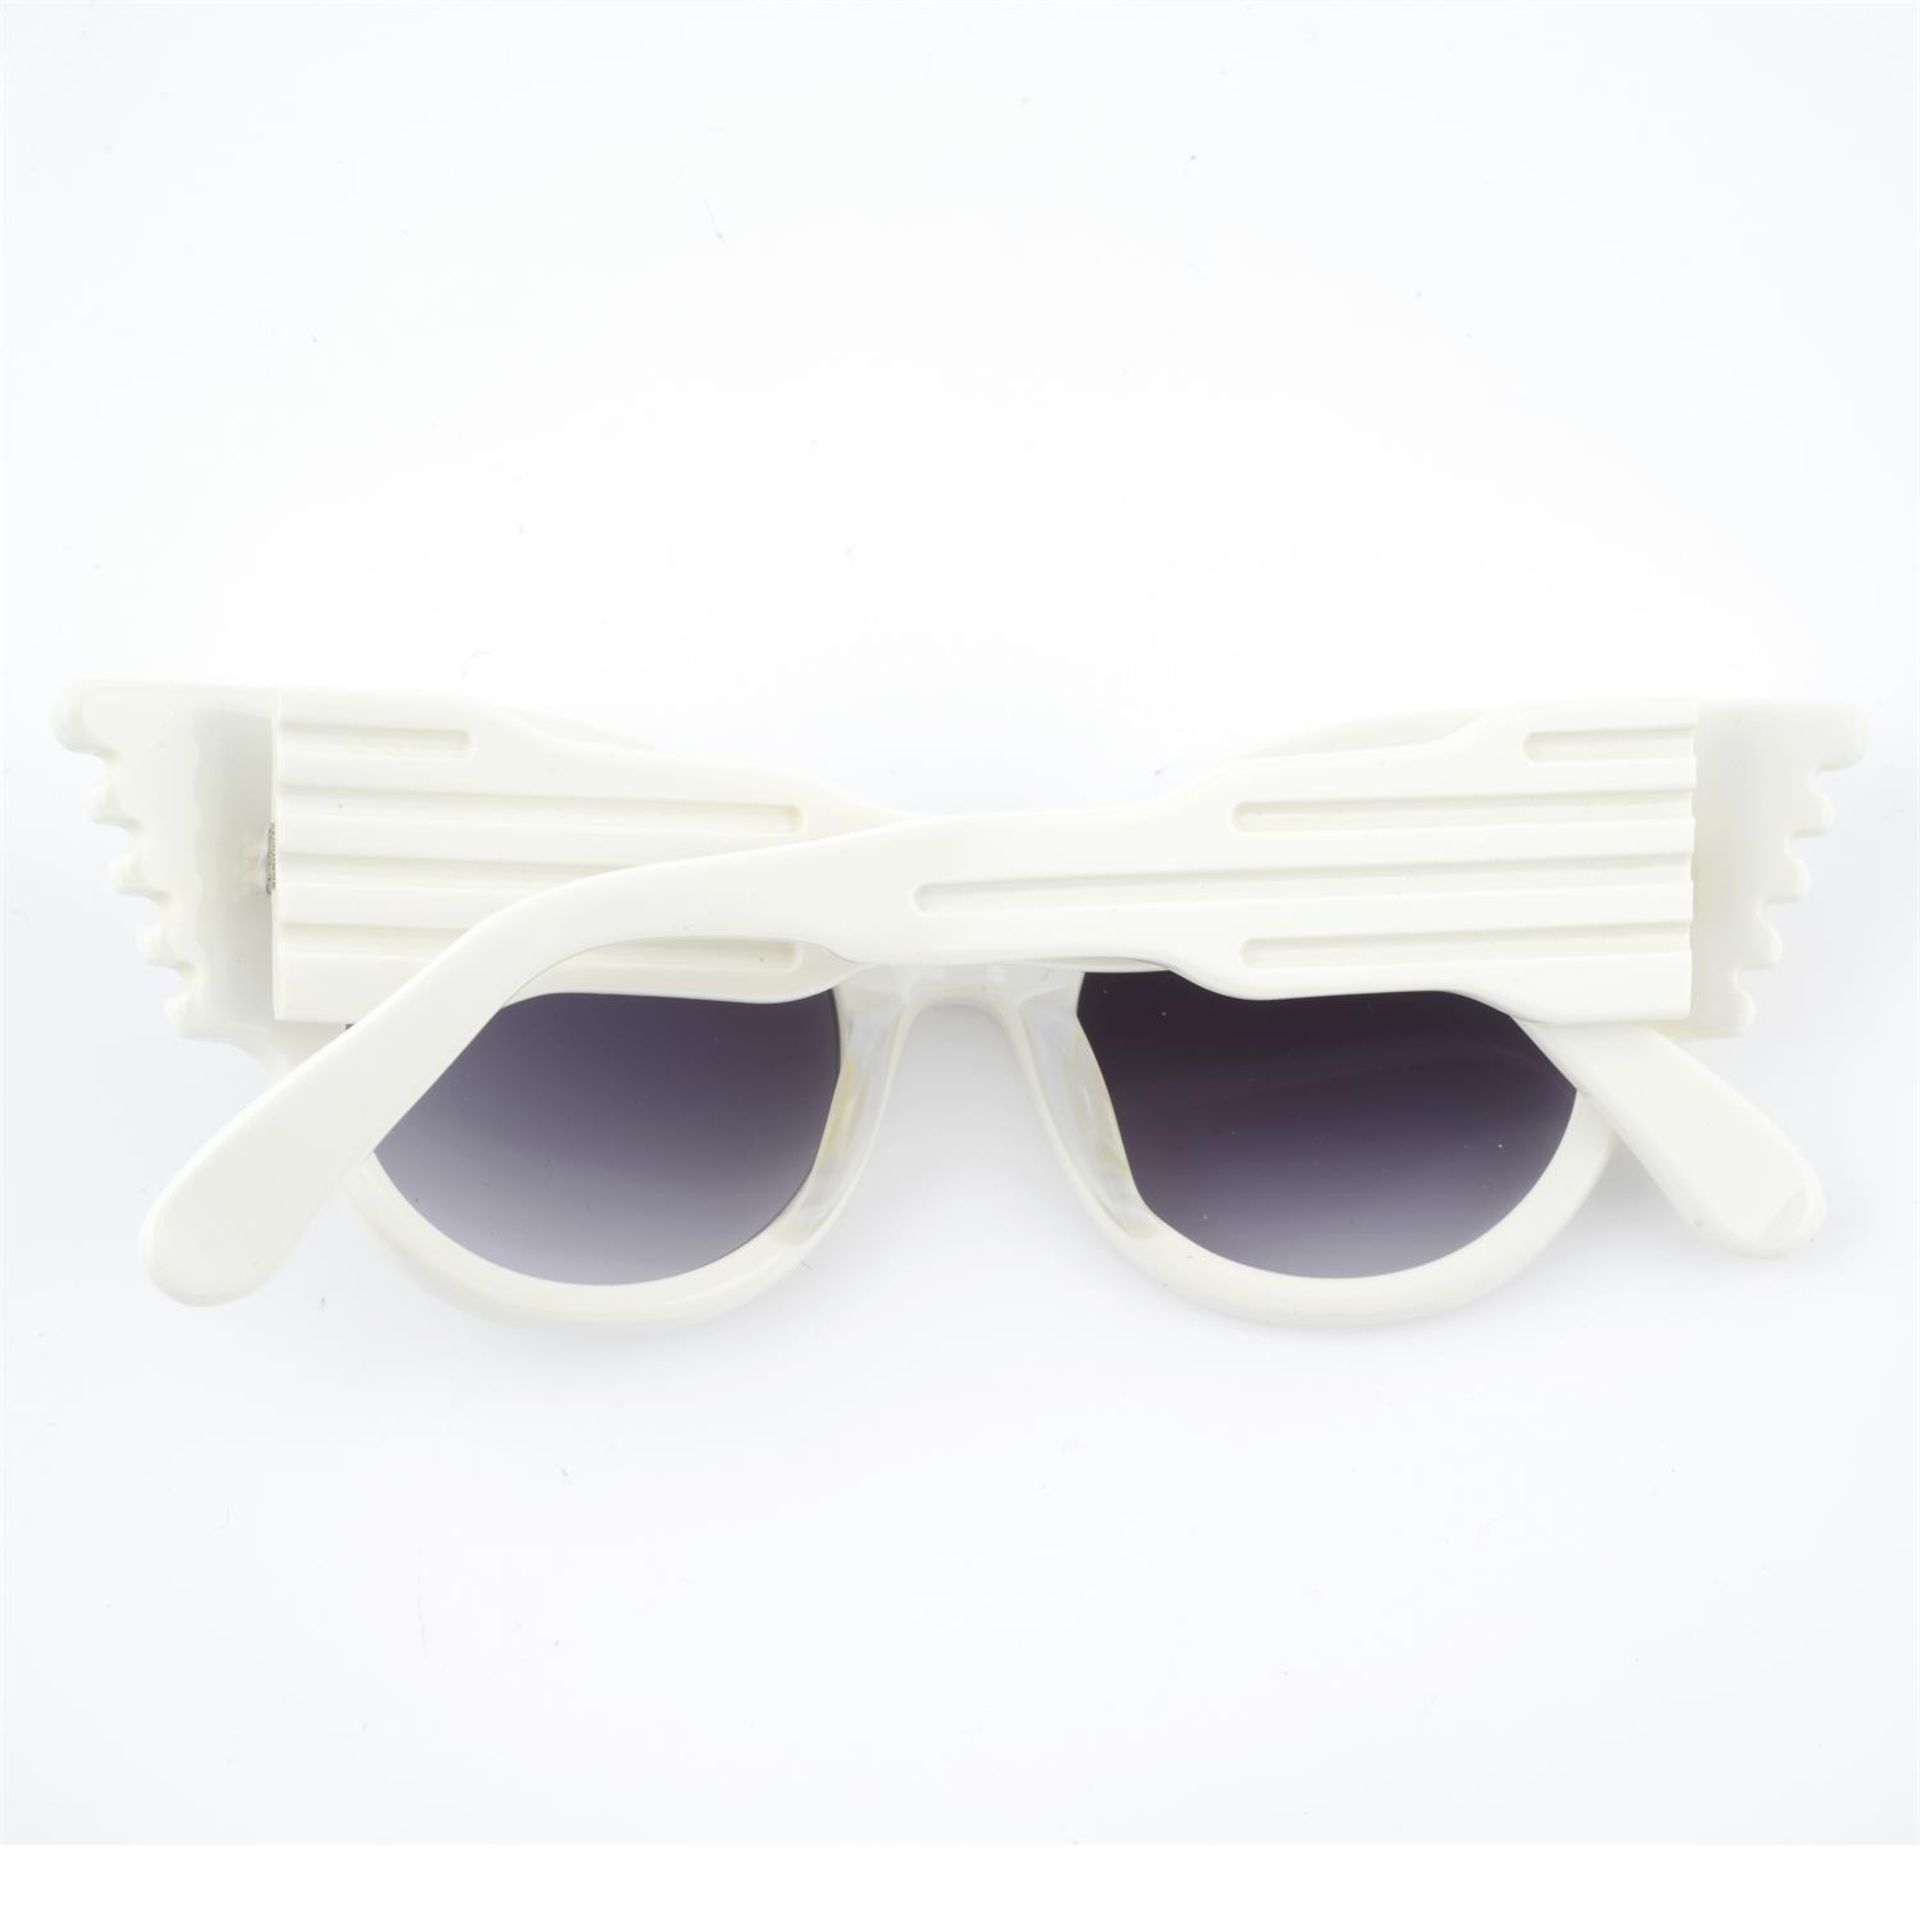 LINDA FARROW - a pair of sunglasses. - Image 2 of 3